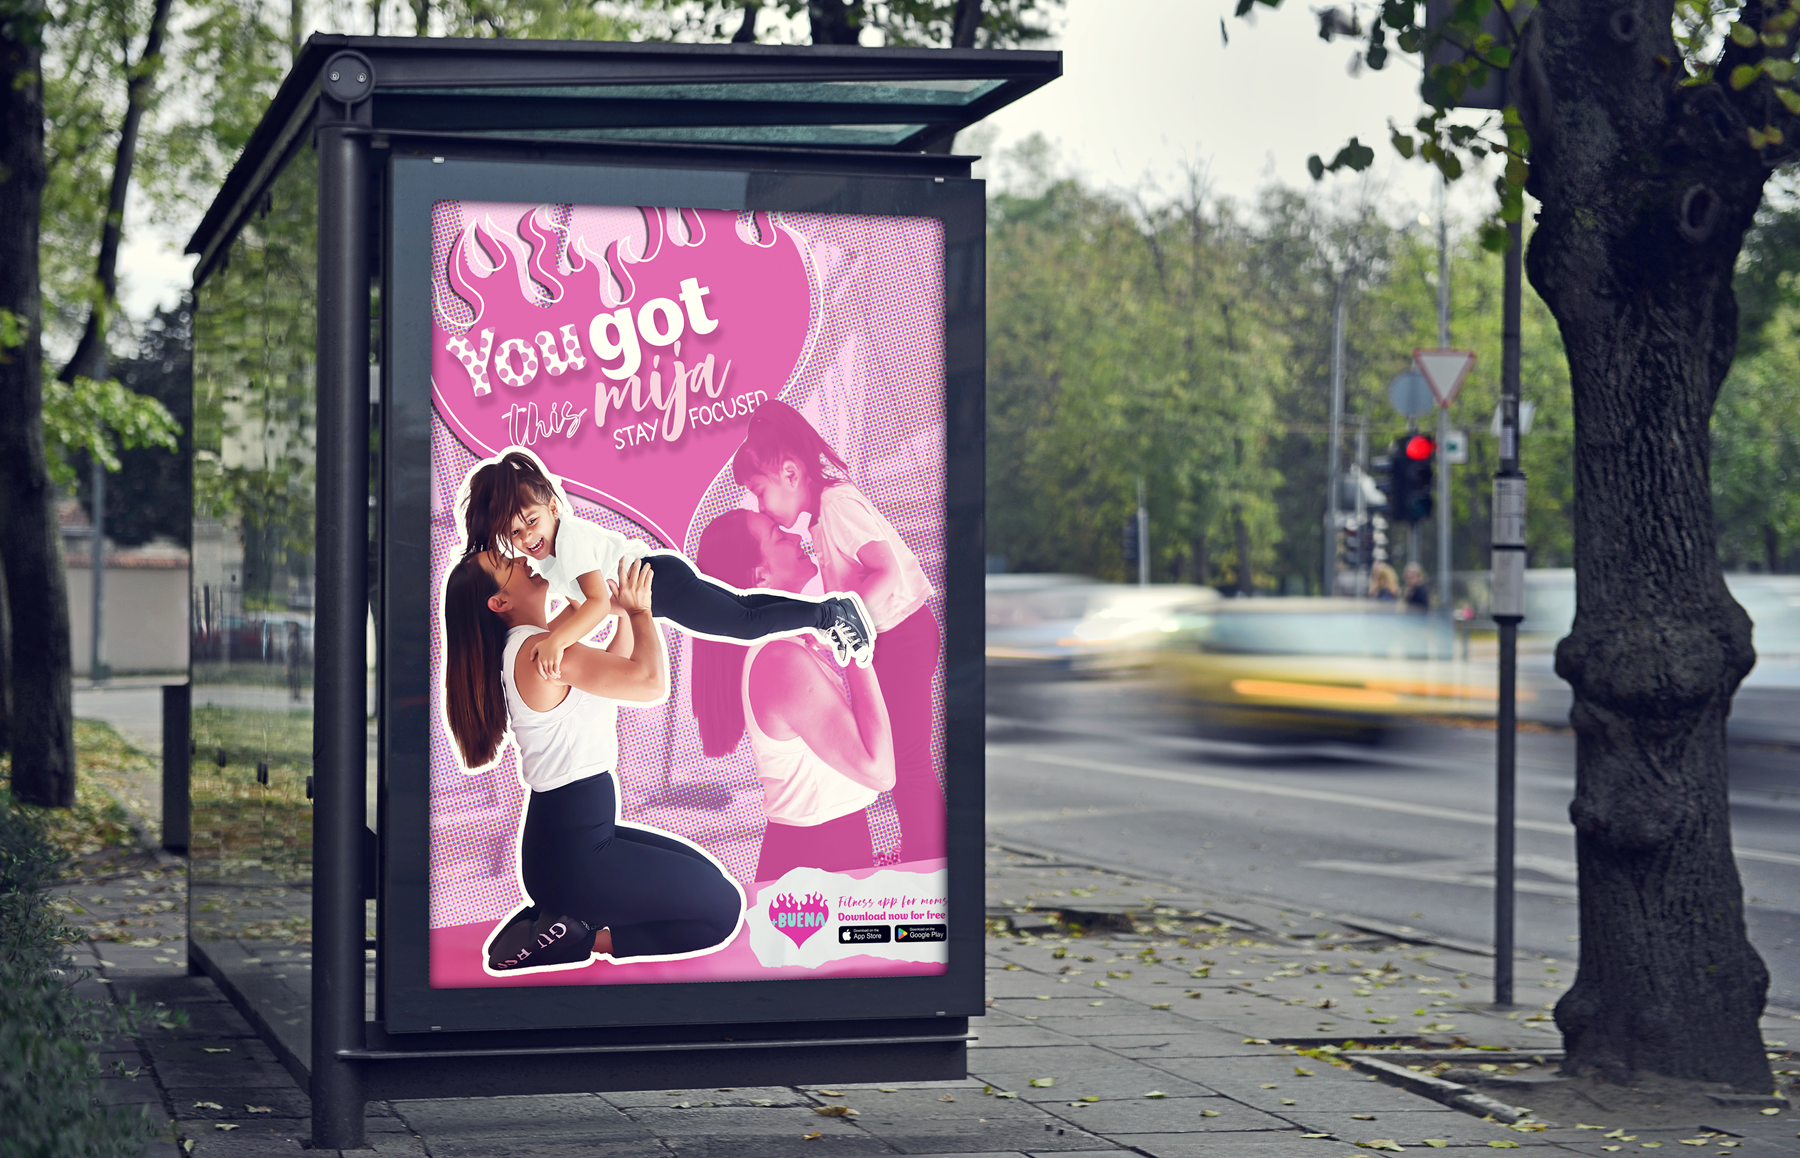 a billboard ad for the "Mas Buena" app